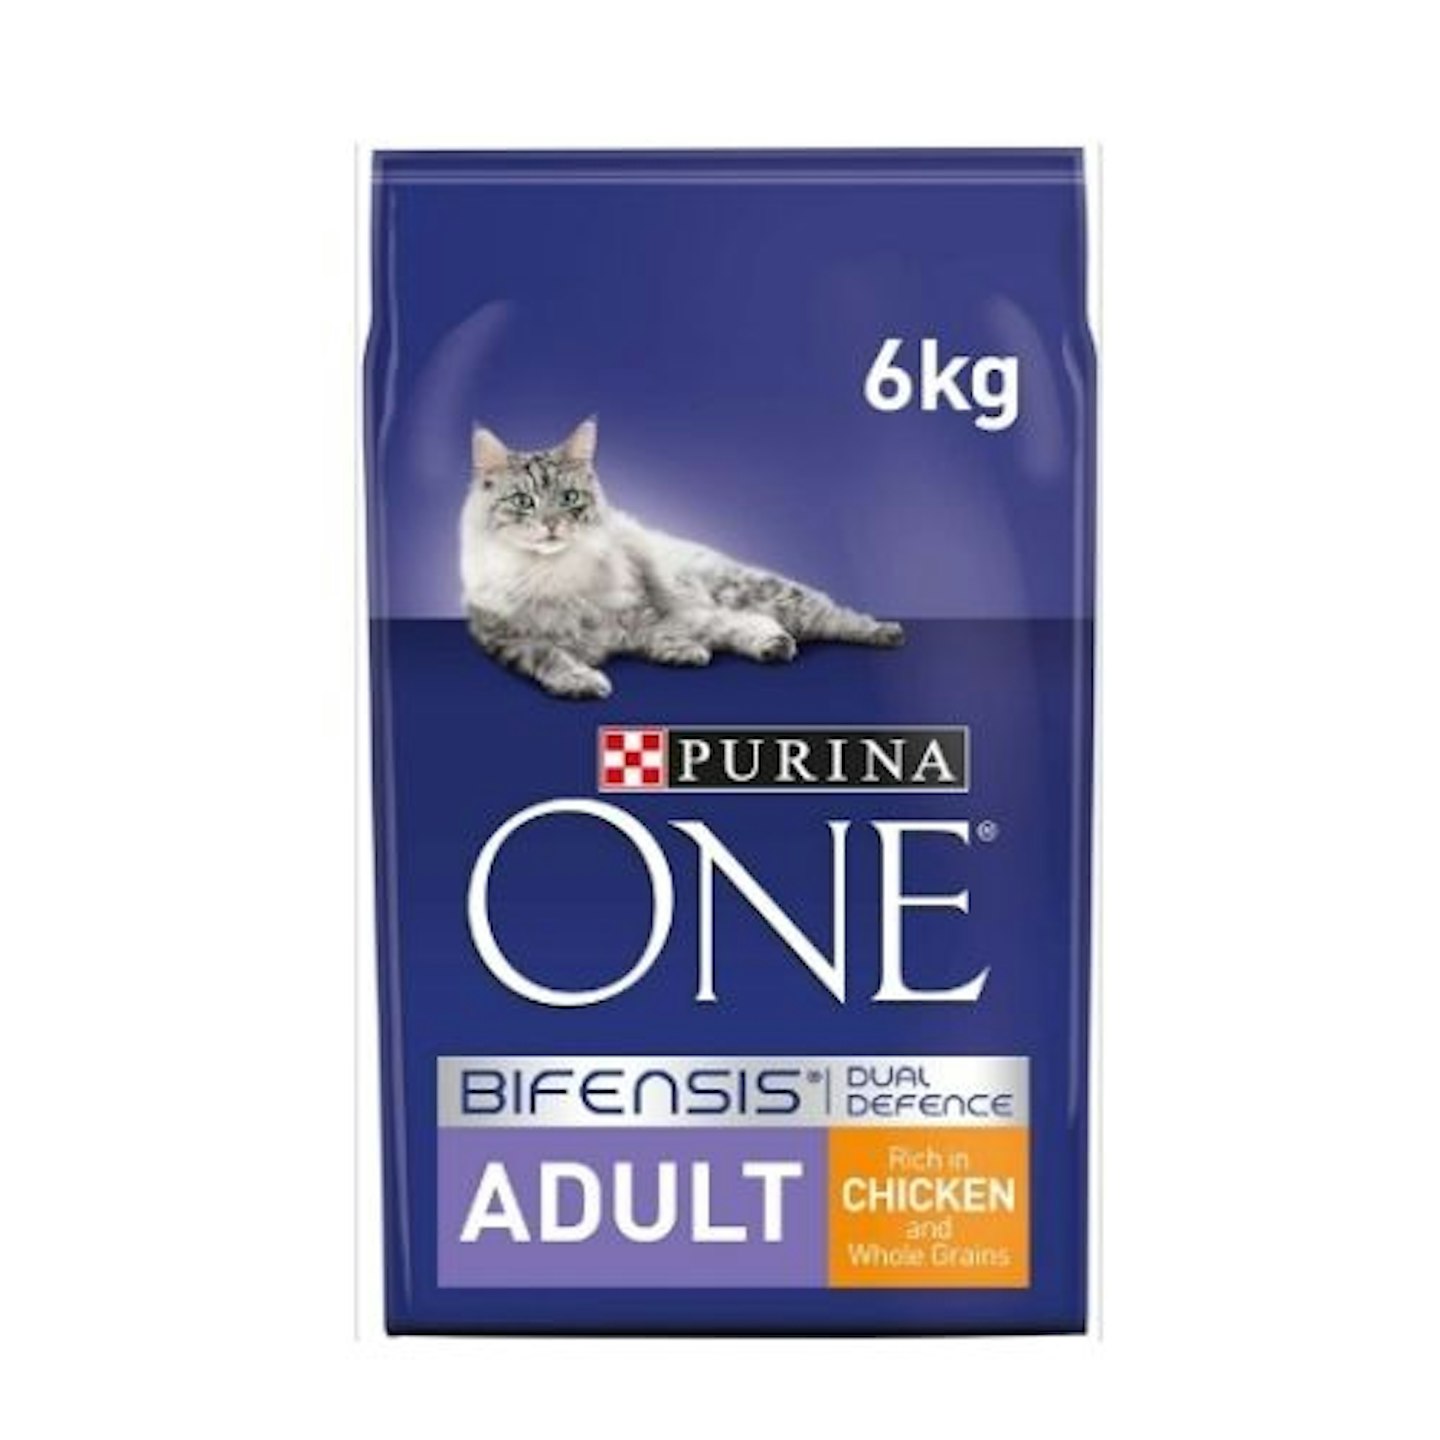 Purina One Adult Cat food bag